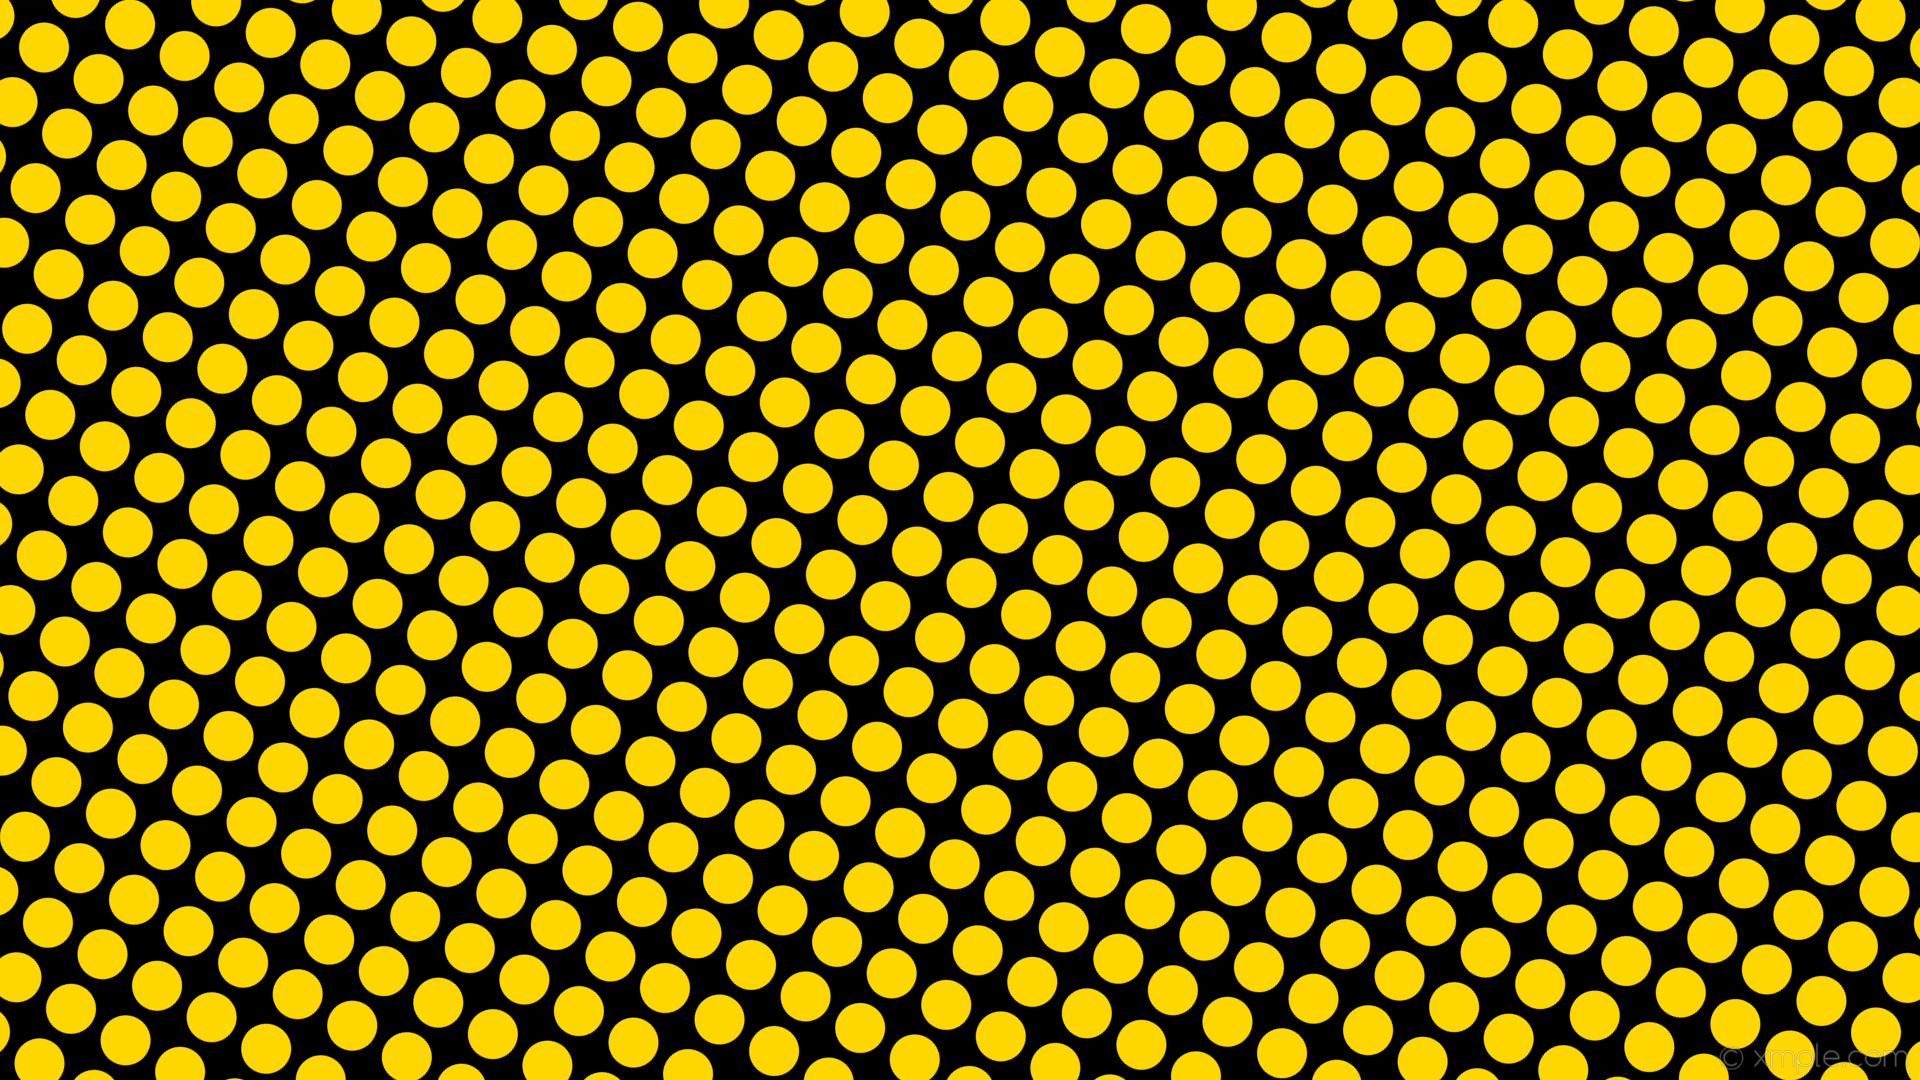 1920x1080 wallpaper spots black dots yellow polka gold #000000 #ffd700 330Â° 50px 63px